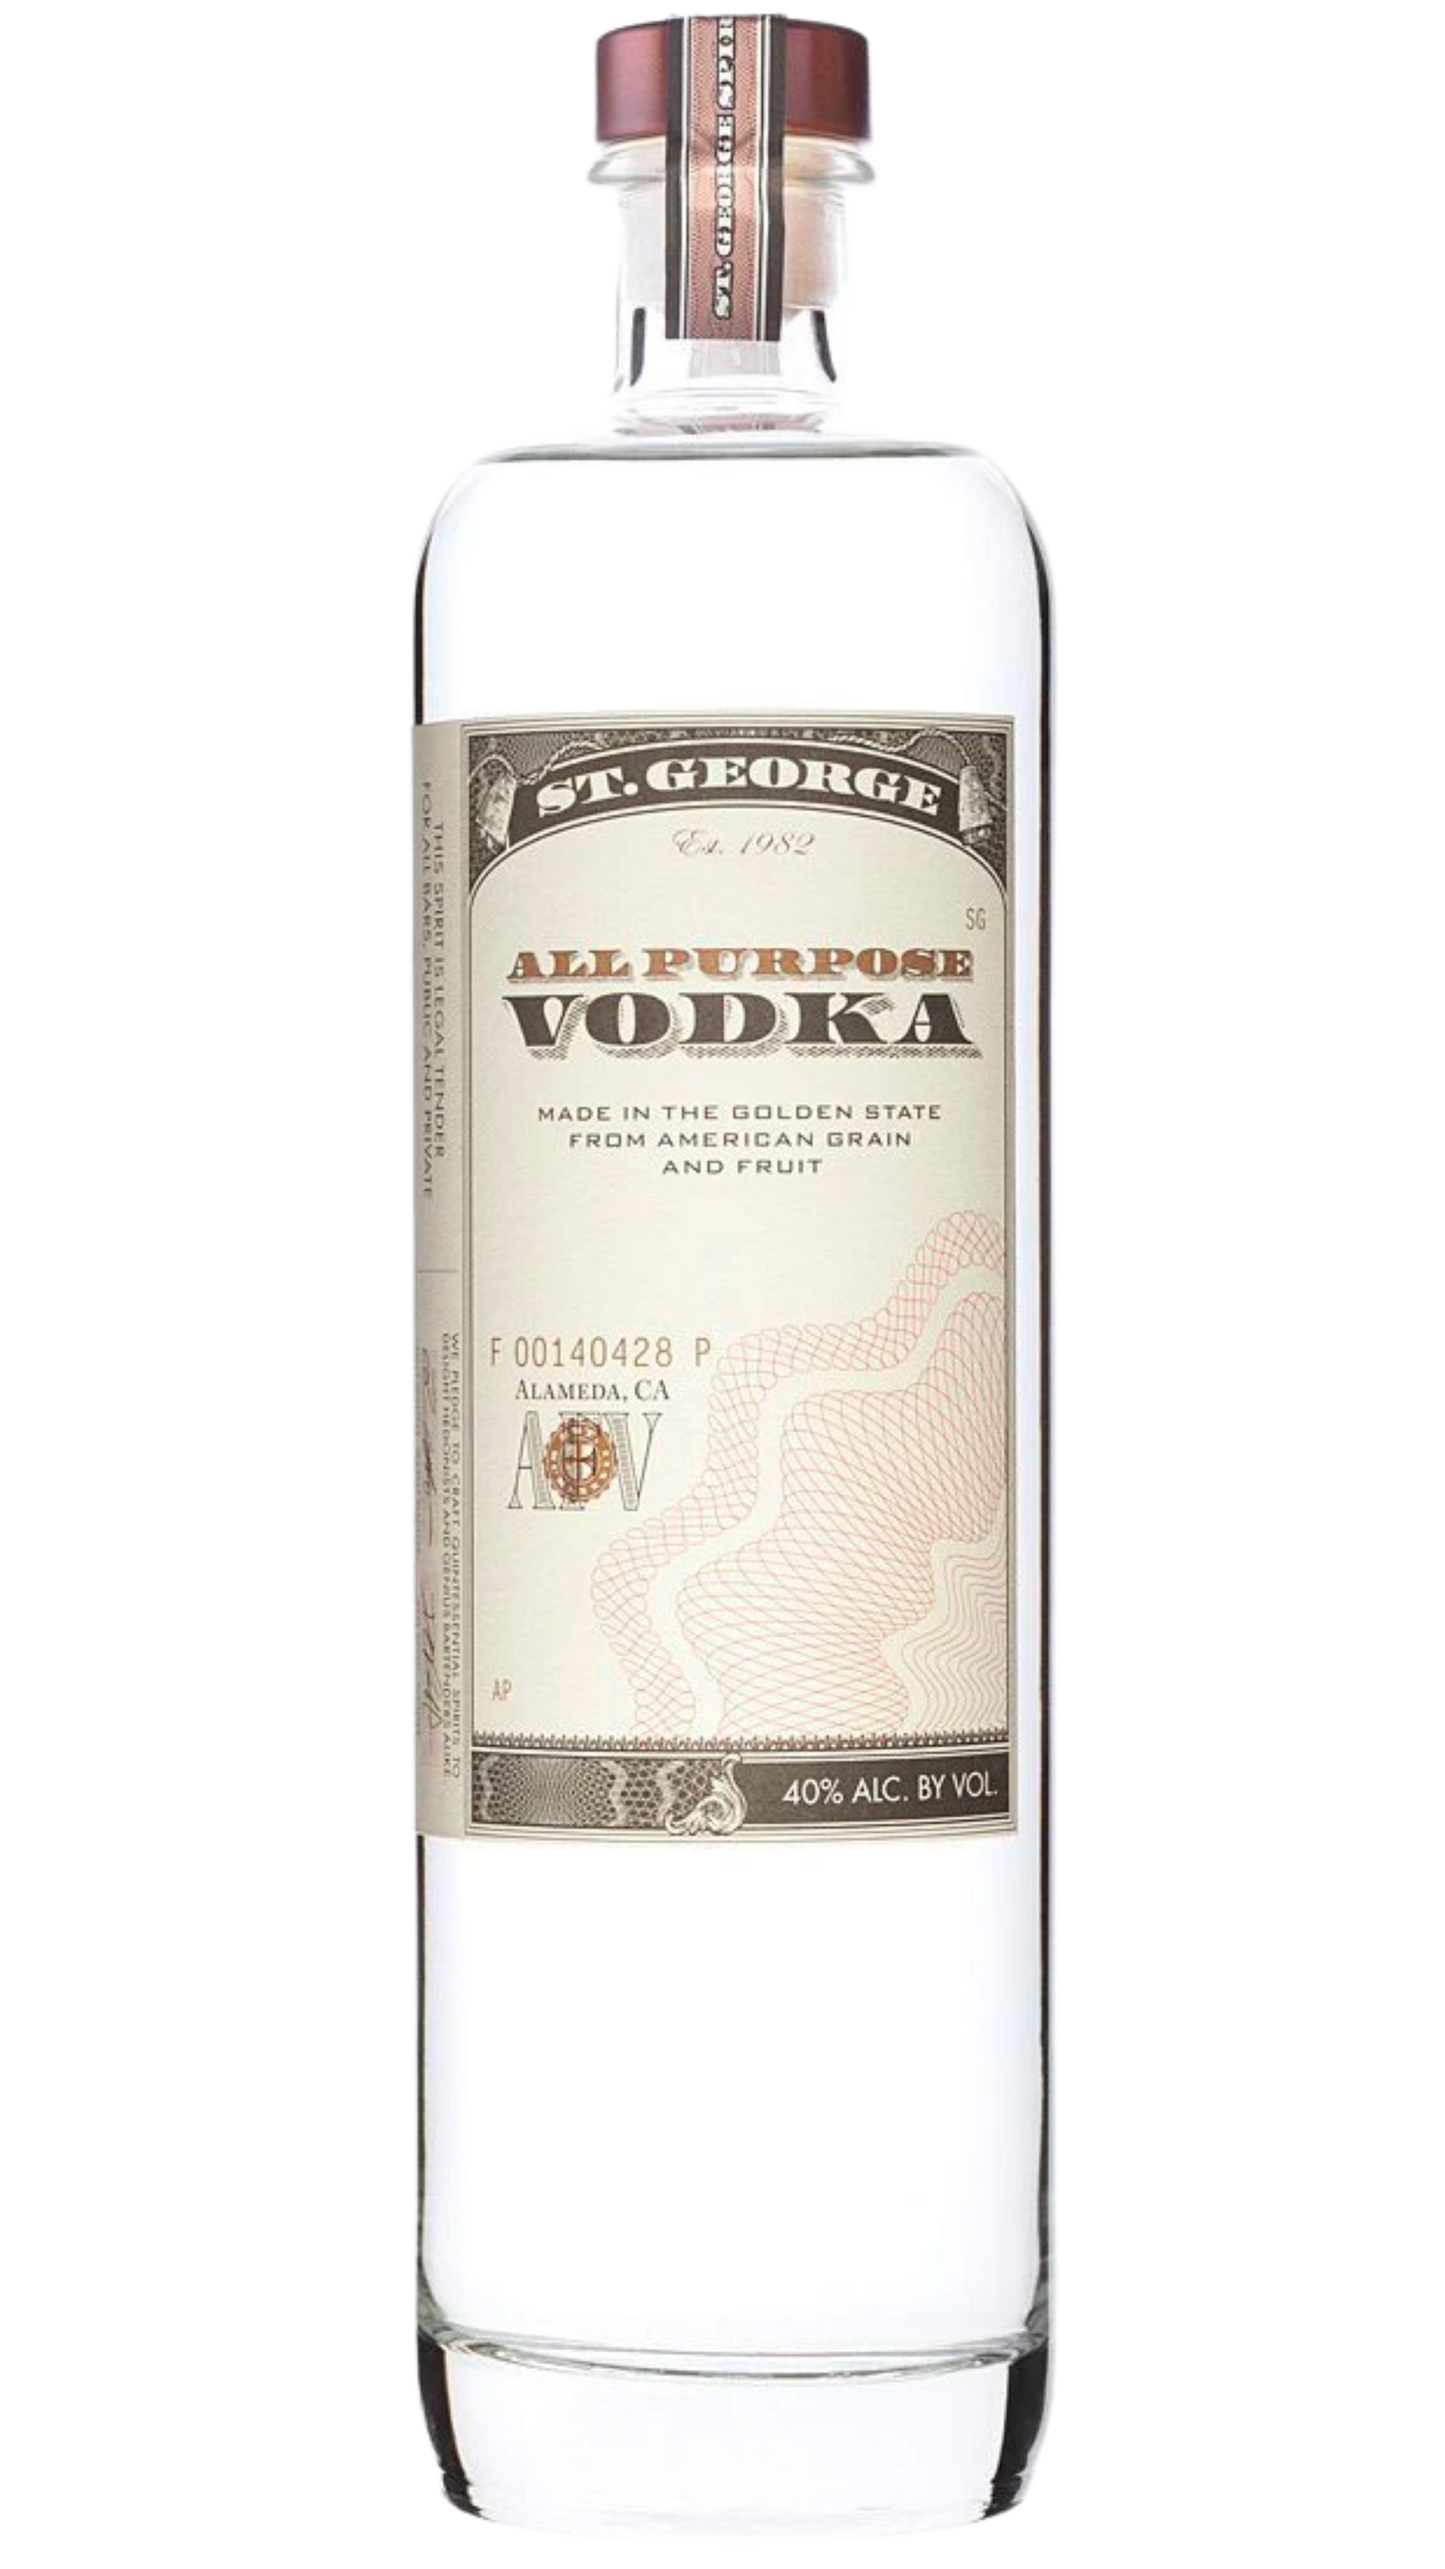 St. George Spirits All Purpose Vodka